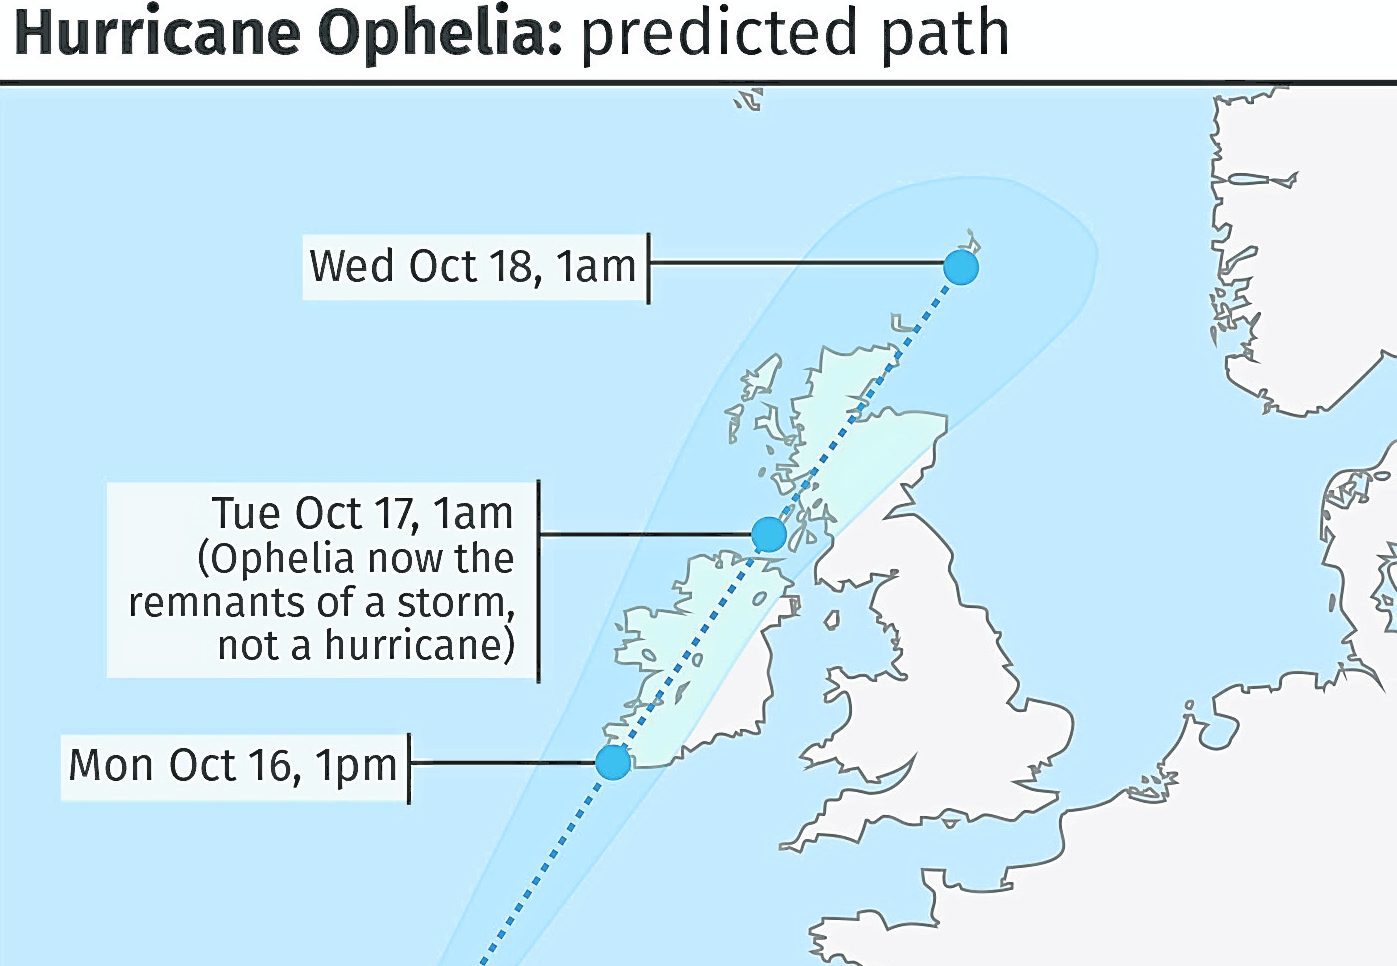 The predicted path of Hurricane Ophelia